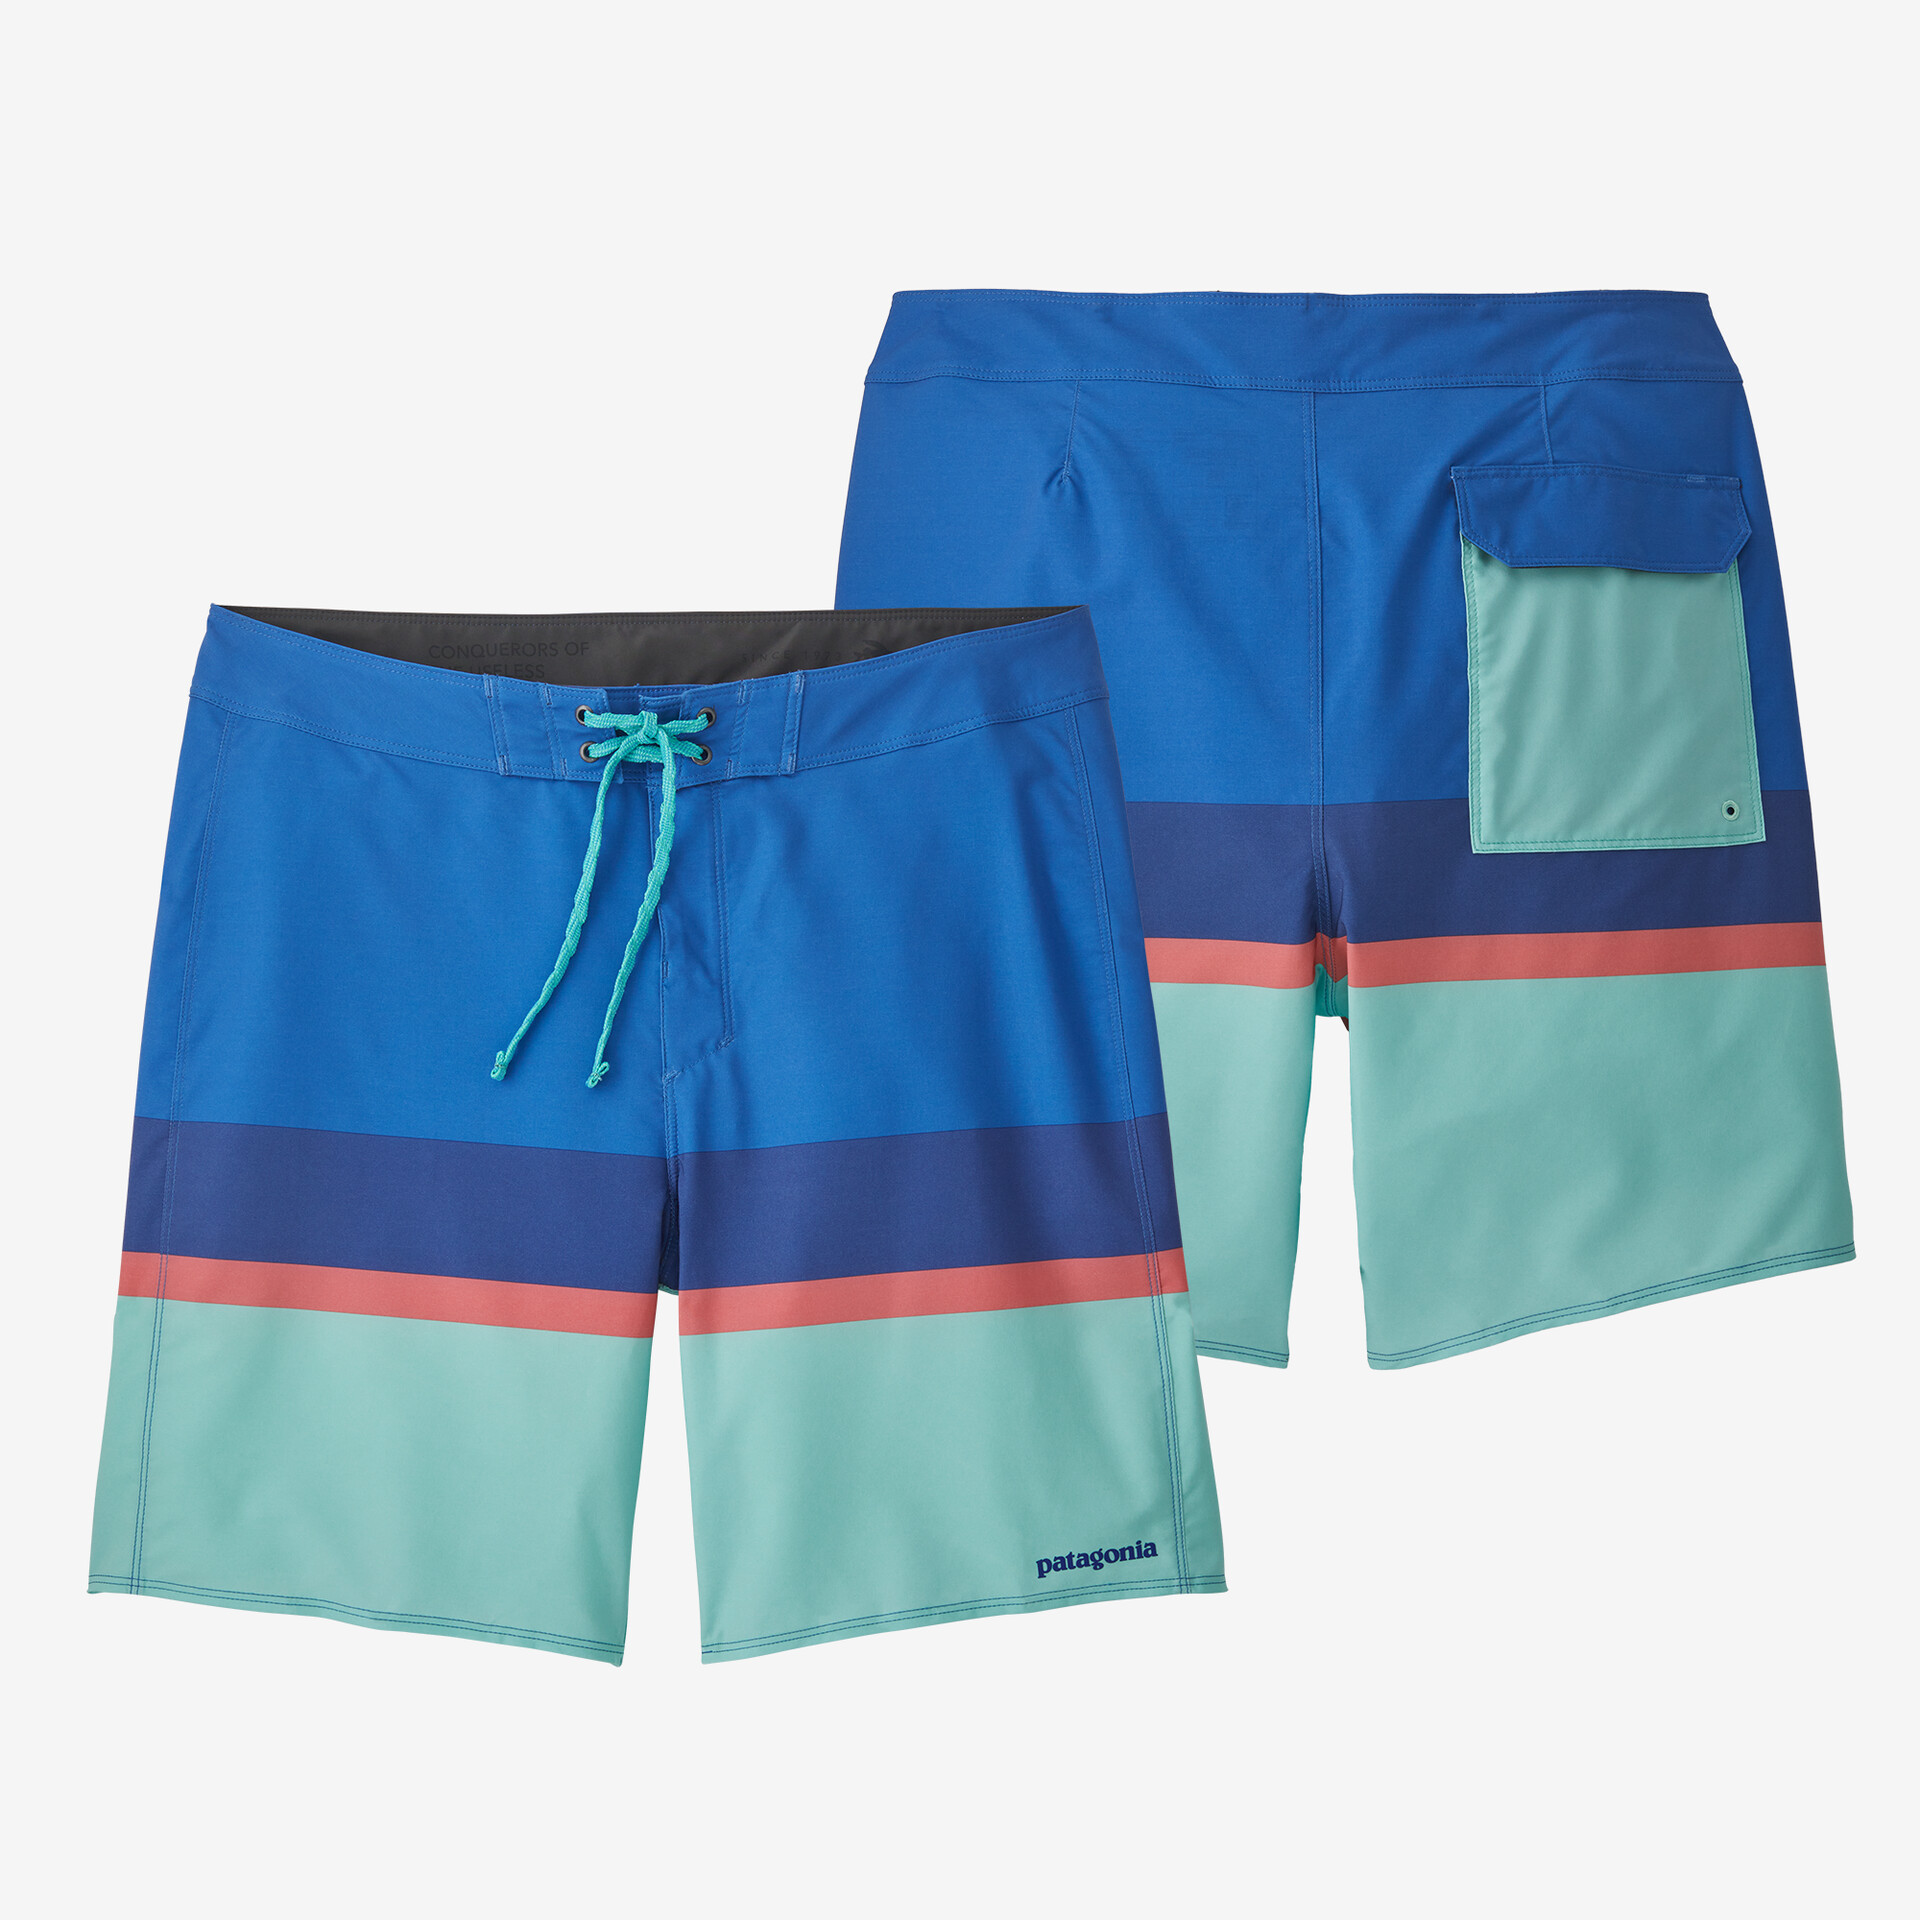 Мужские шорты для доски Hydropeak Patagonia, цвет Topa Stripe: Early Teal мужские шорты для плавания пляжные шорты для серфинга бермуды повседневные шорты для бега и серфинга новинка 2021